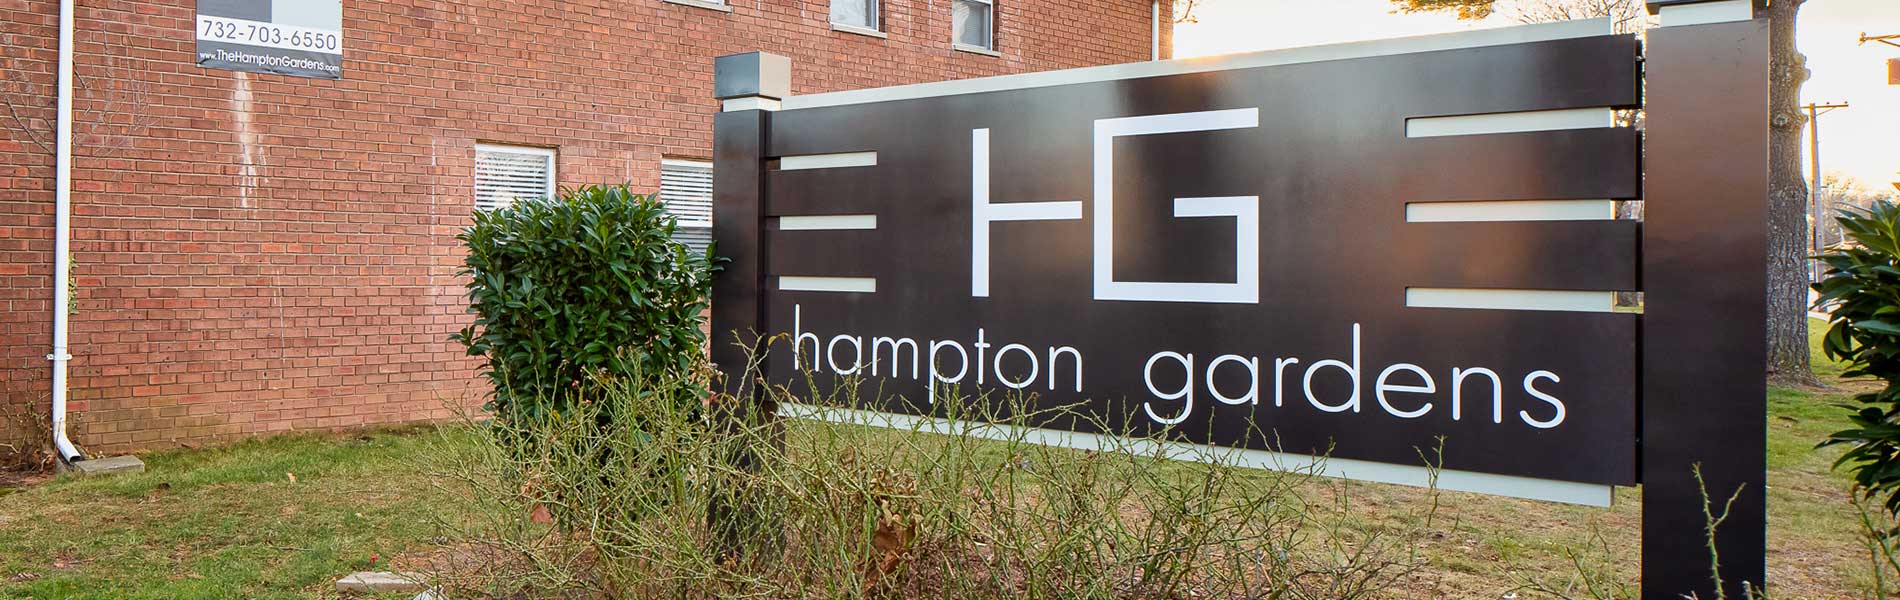 Hampton Gardens Property Signage